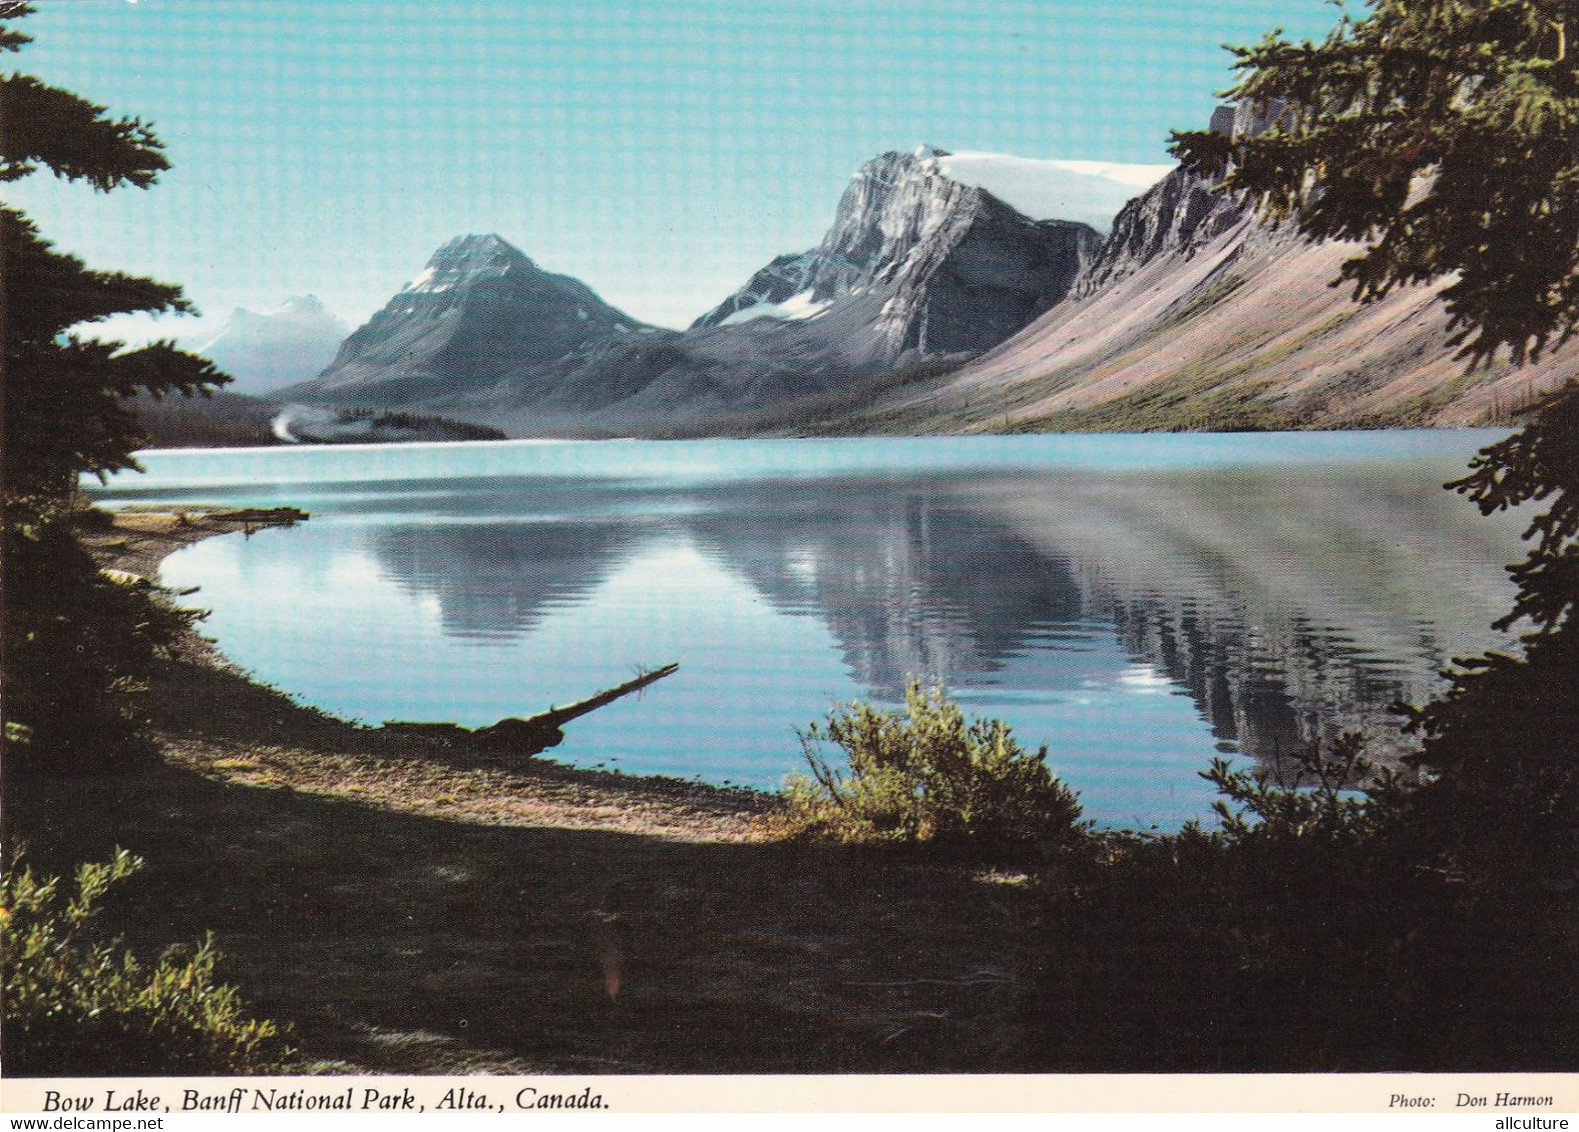 A11497- BOW LAKE, ICEFIELD HIGHWAY, BOW PEAK, CROWFOOT MOUNTAIN BANFF NATIONAL PARK ALBERTA CANADA POSTCARD - Banff